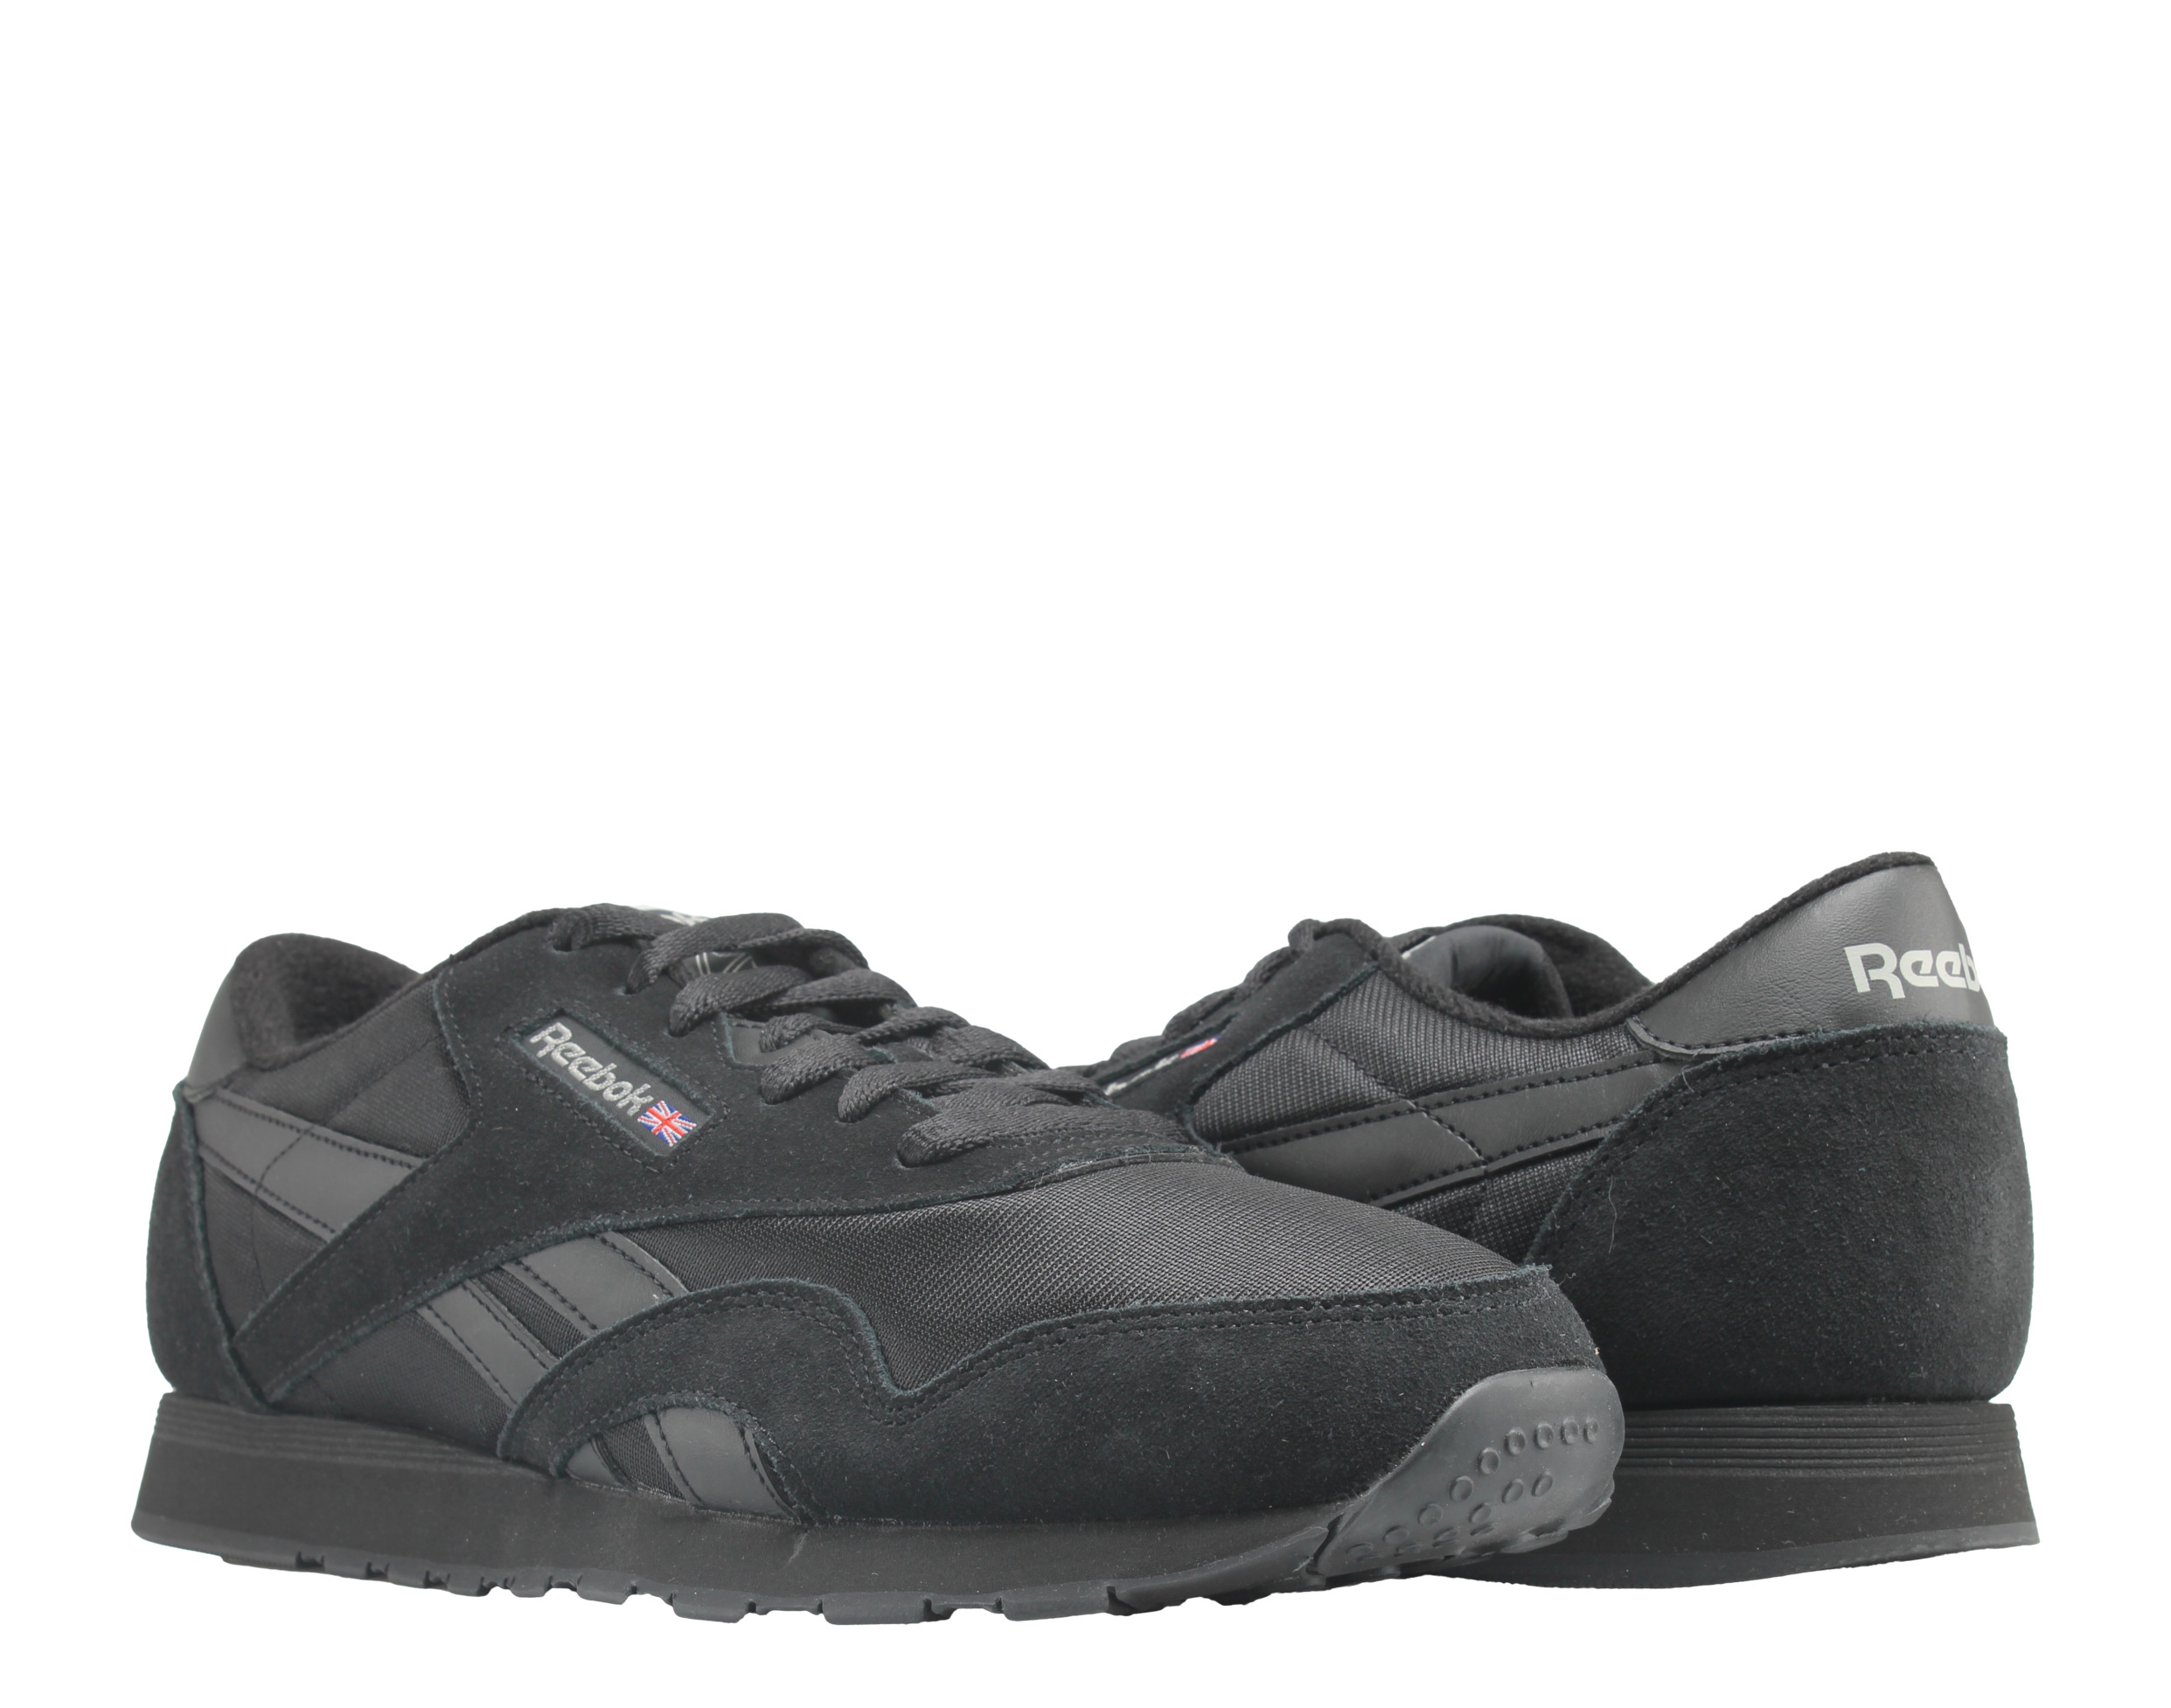 Reebok Classic Nylon Men's Running Shoes Size 9 - image 1 of 6